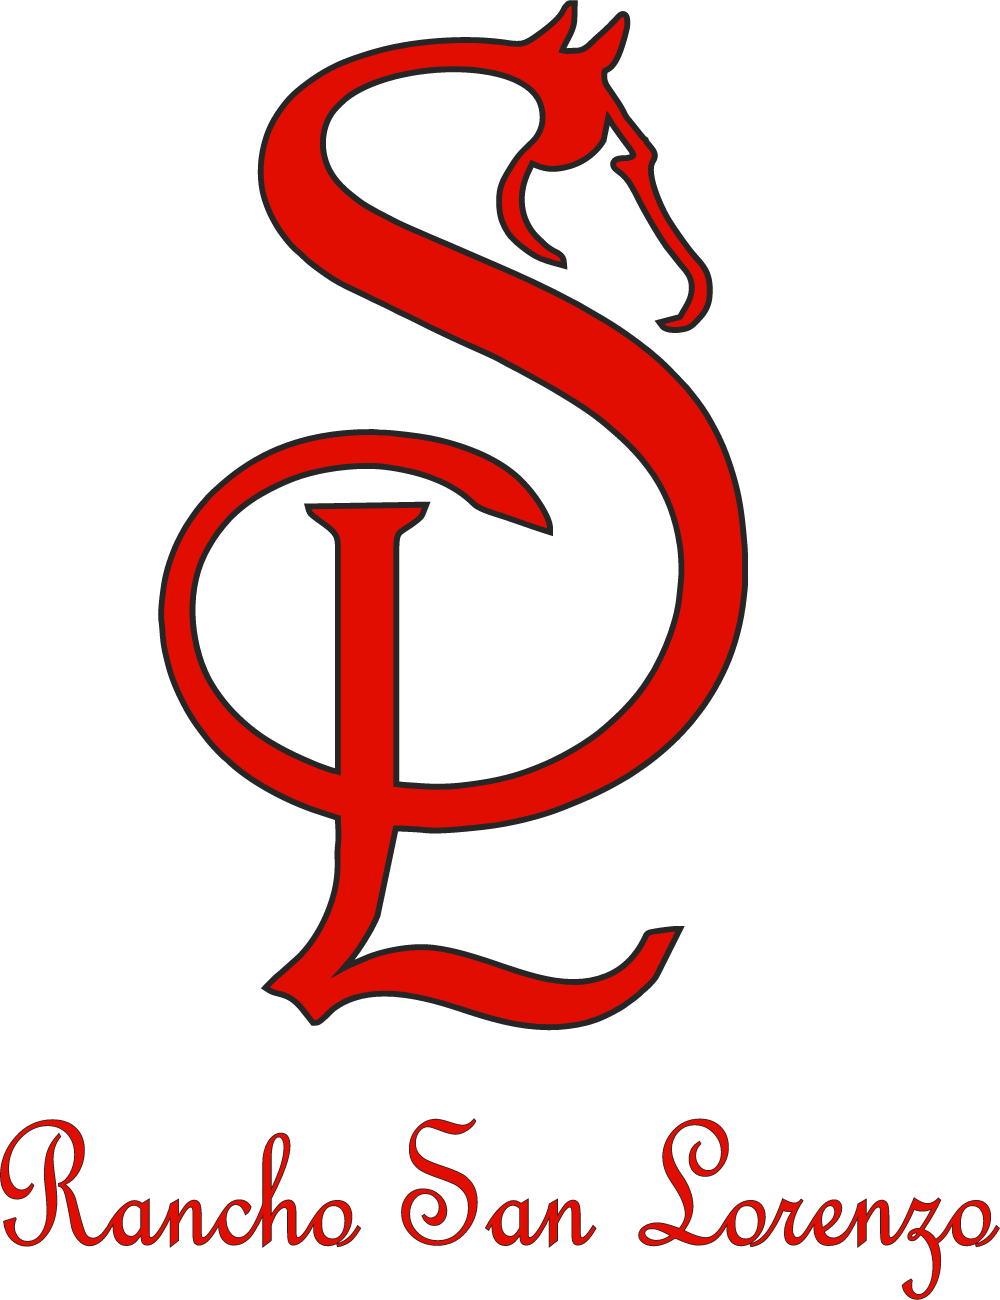 Rancho San Lorenzo Logo Logos